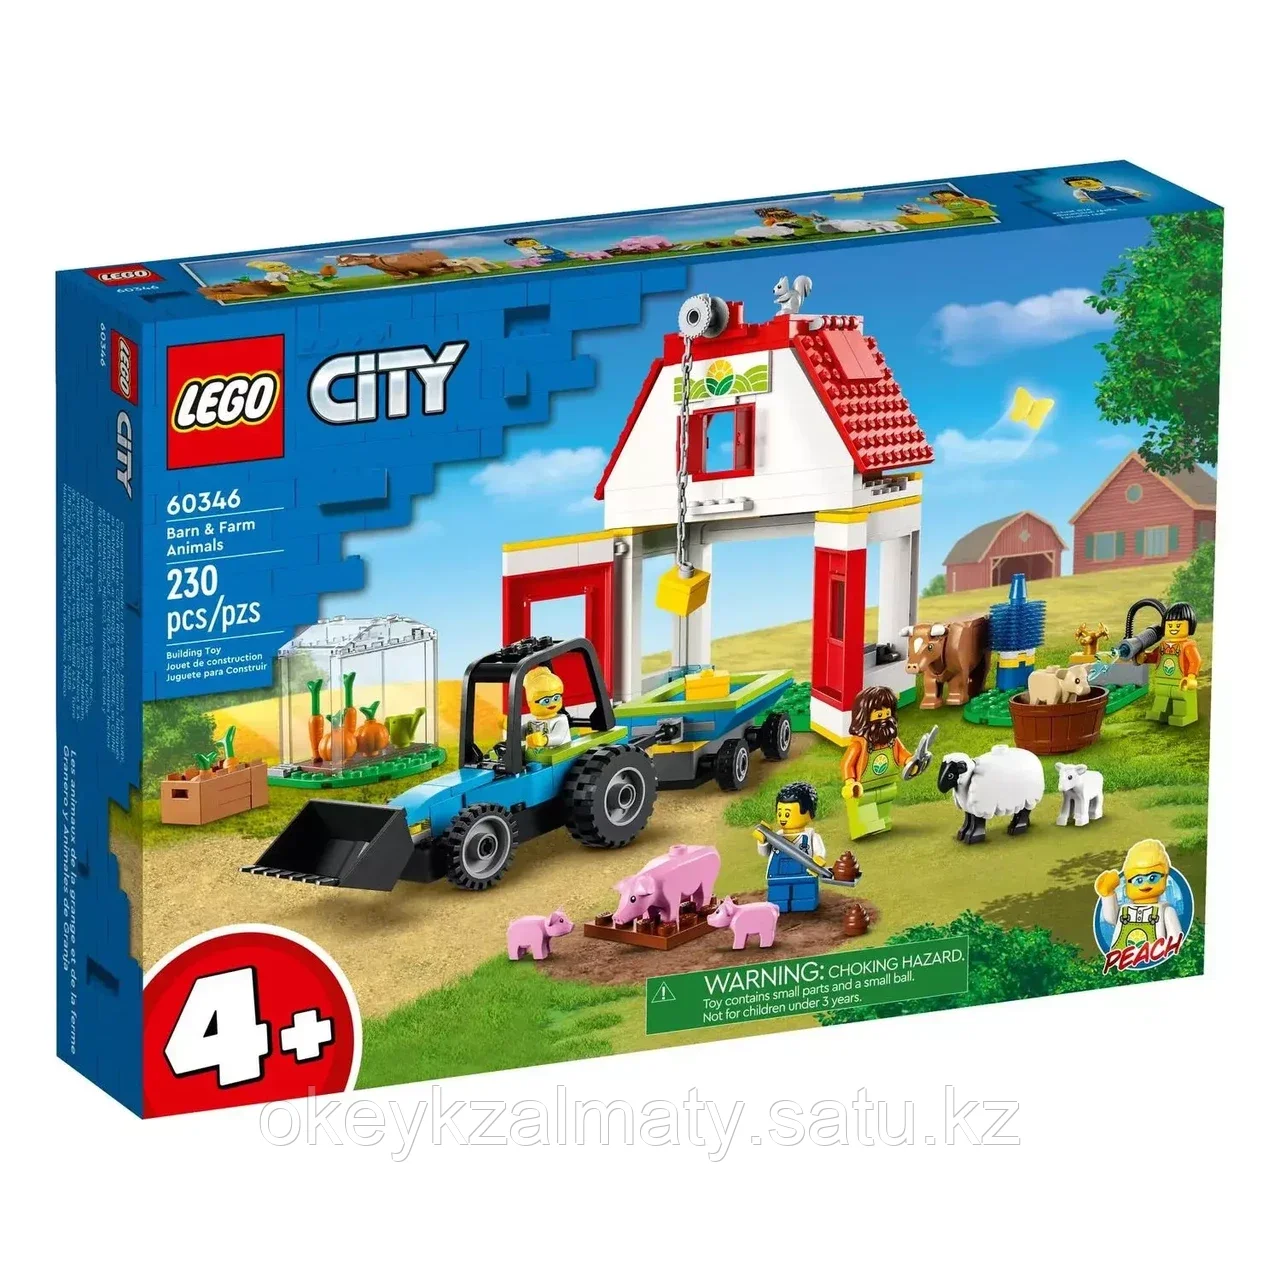 LEGO City: Ферма и амбар с животными 60346